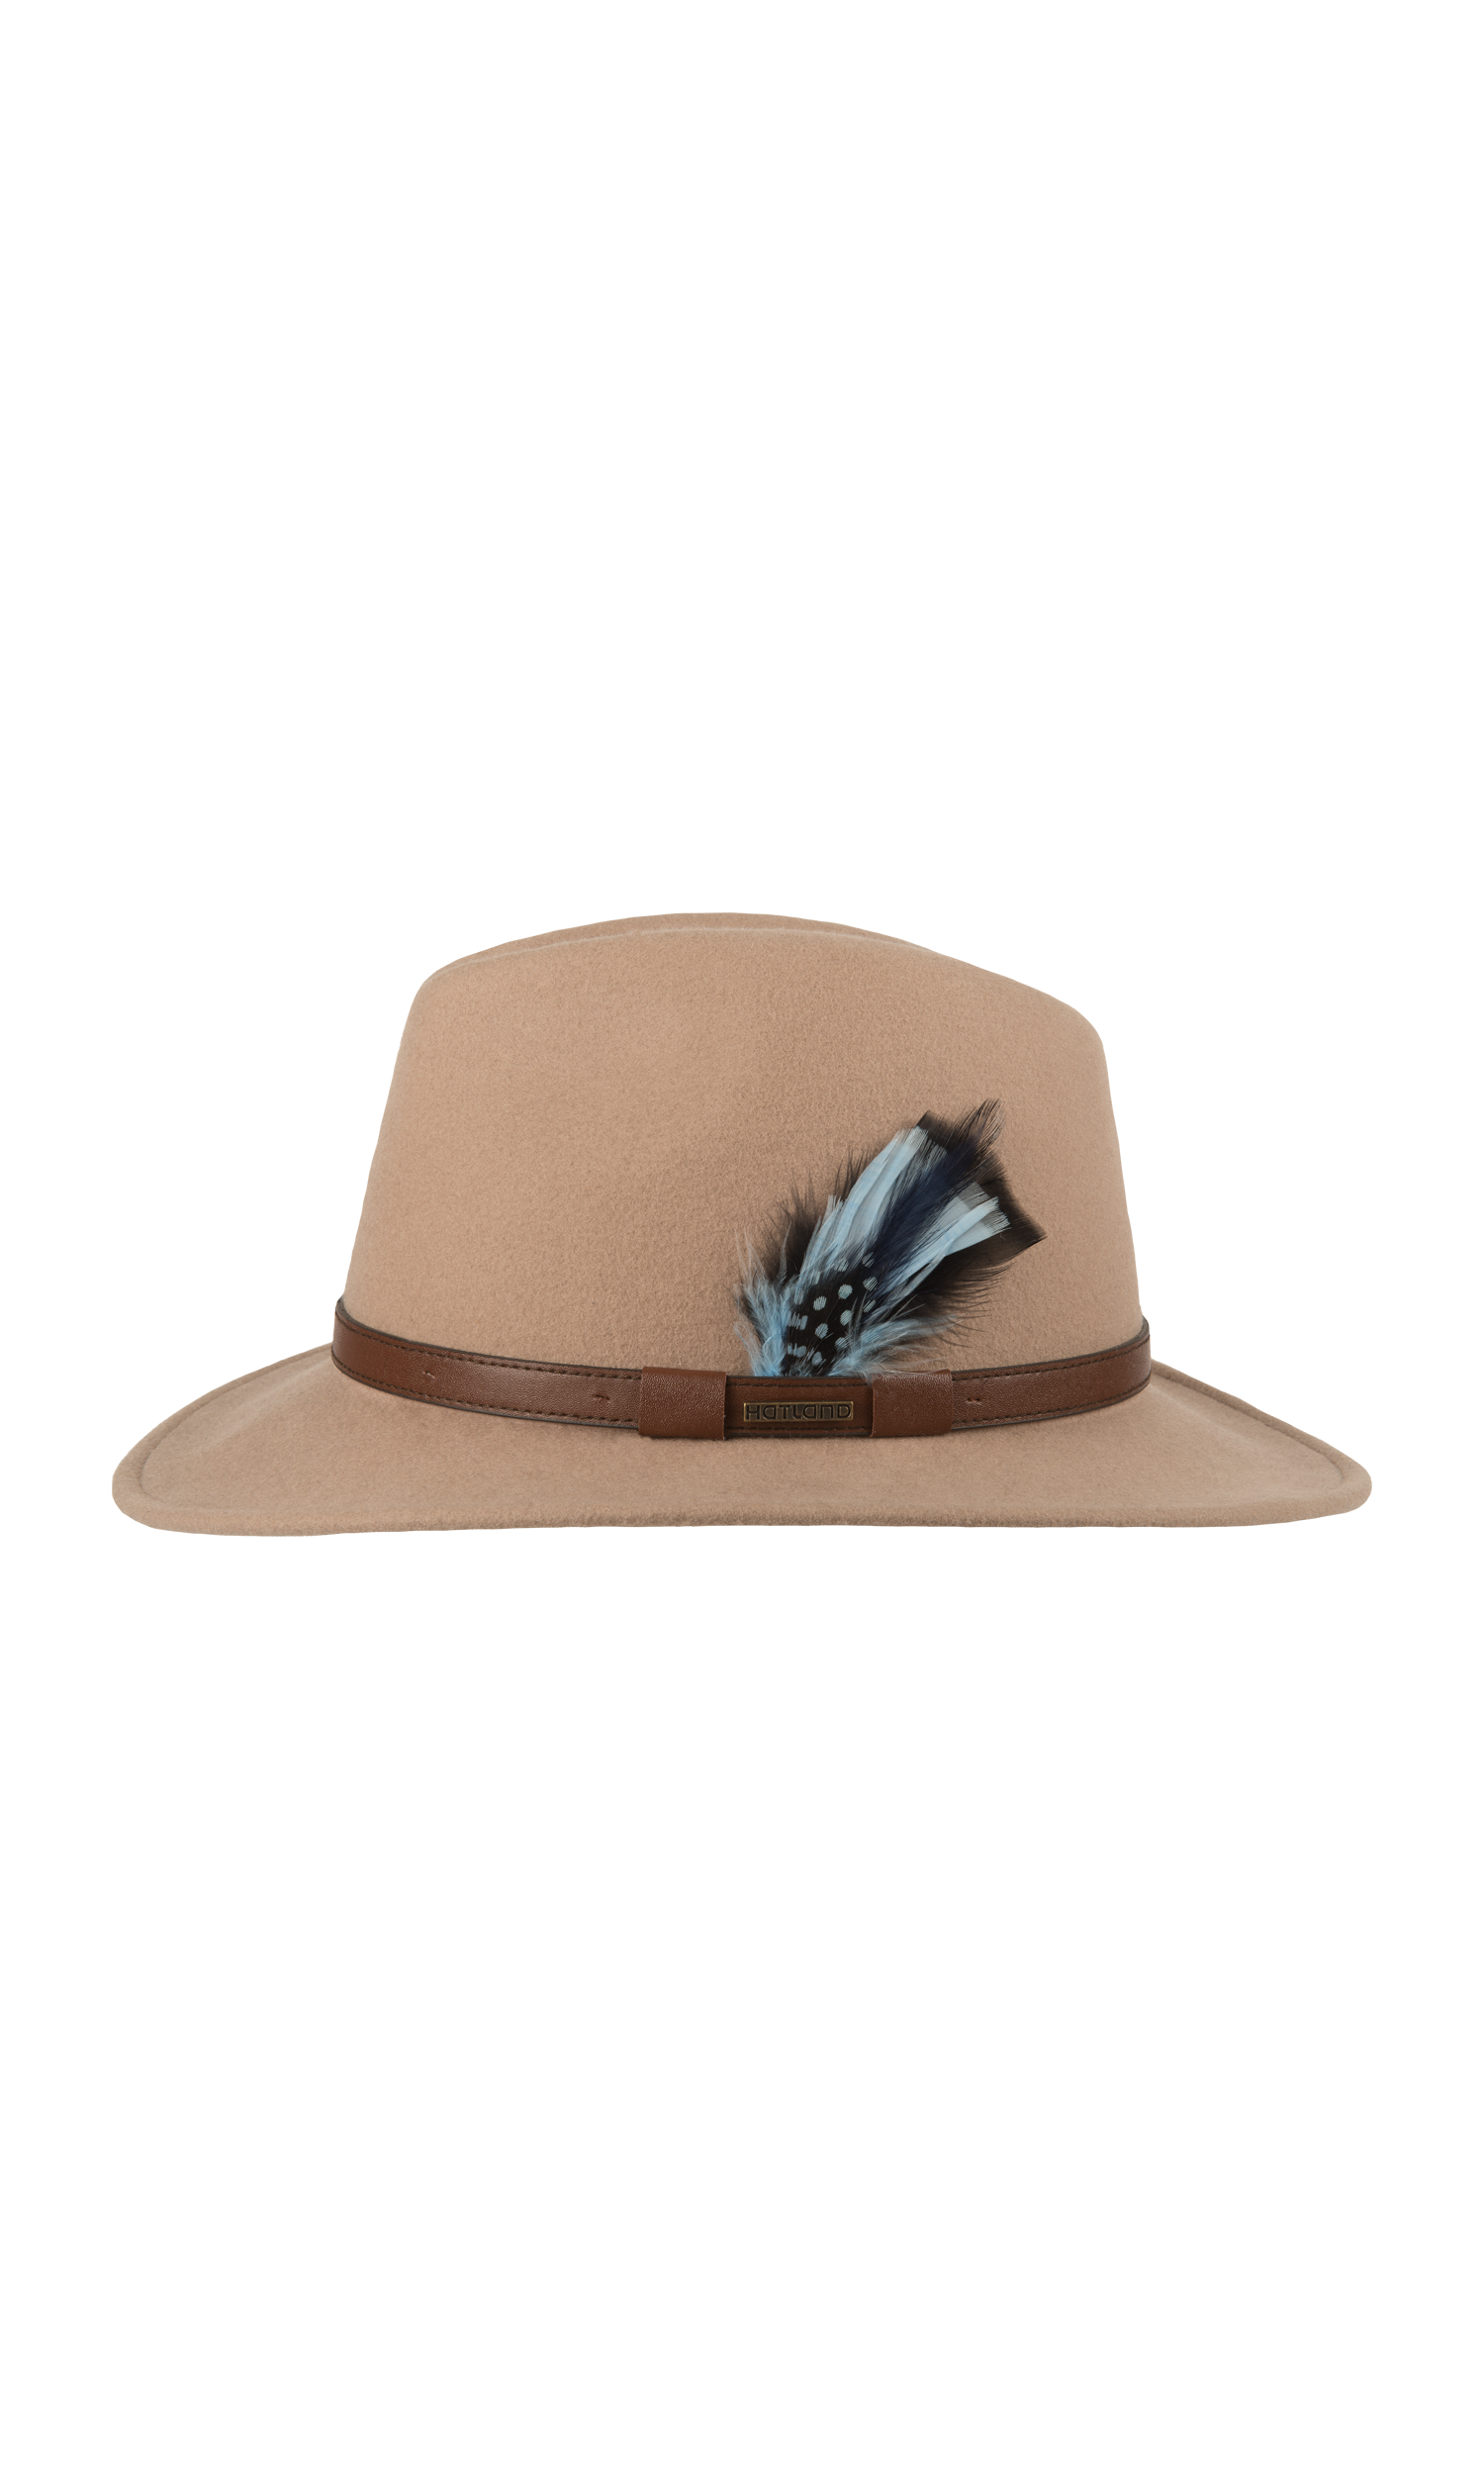 Albertis - Vilten hoed